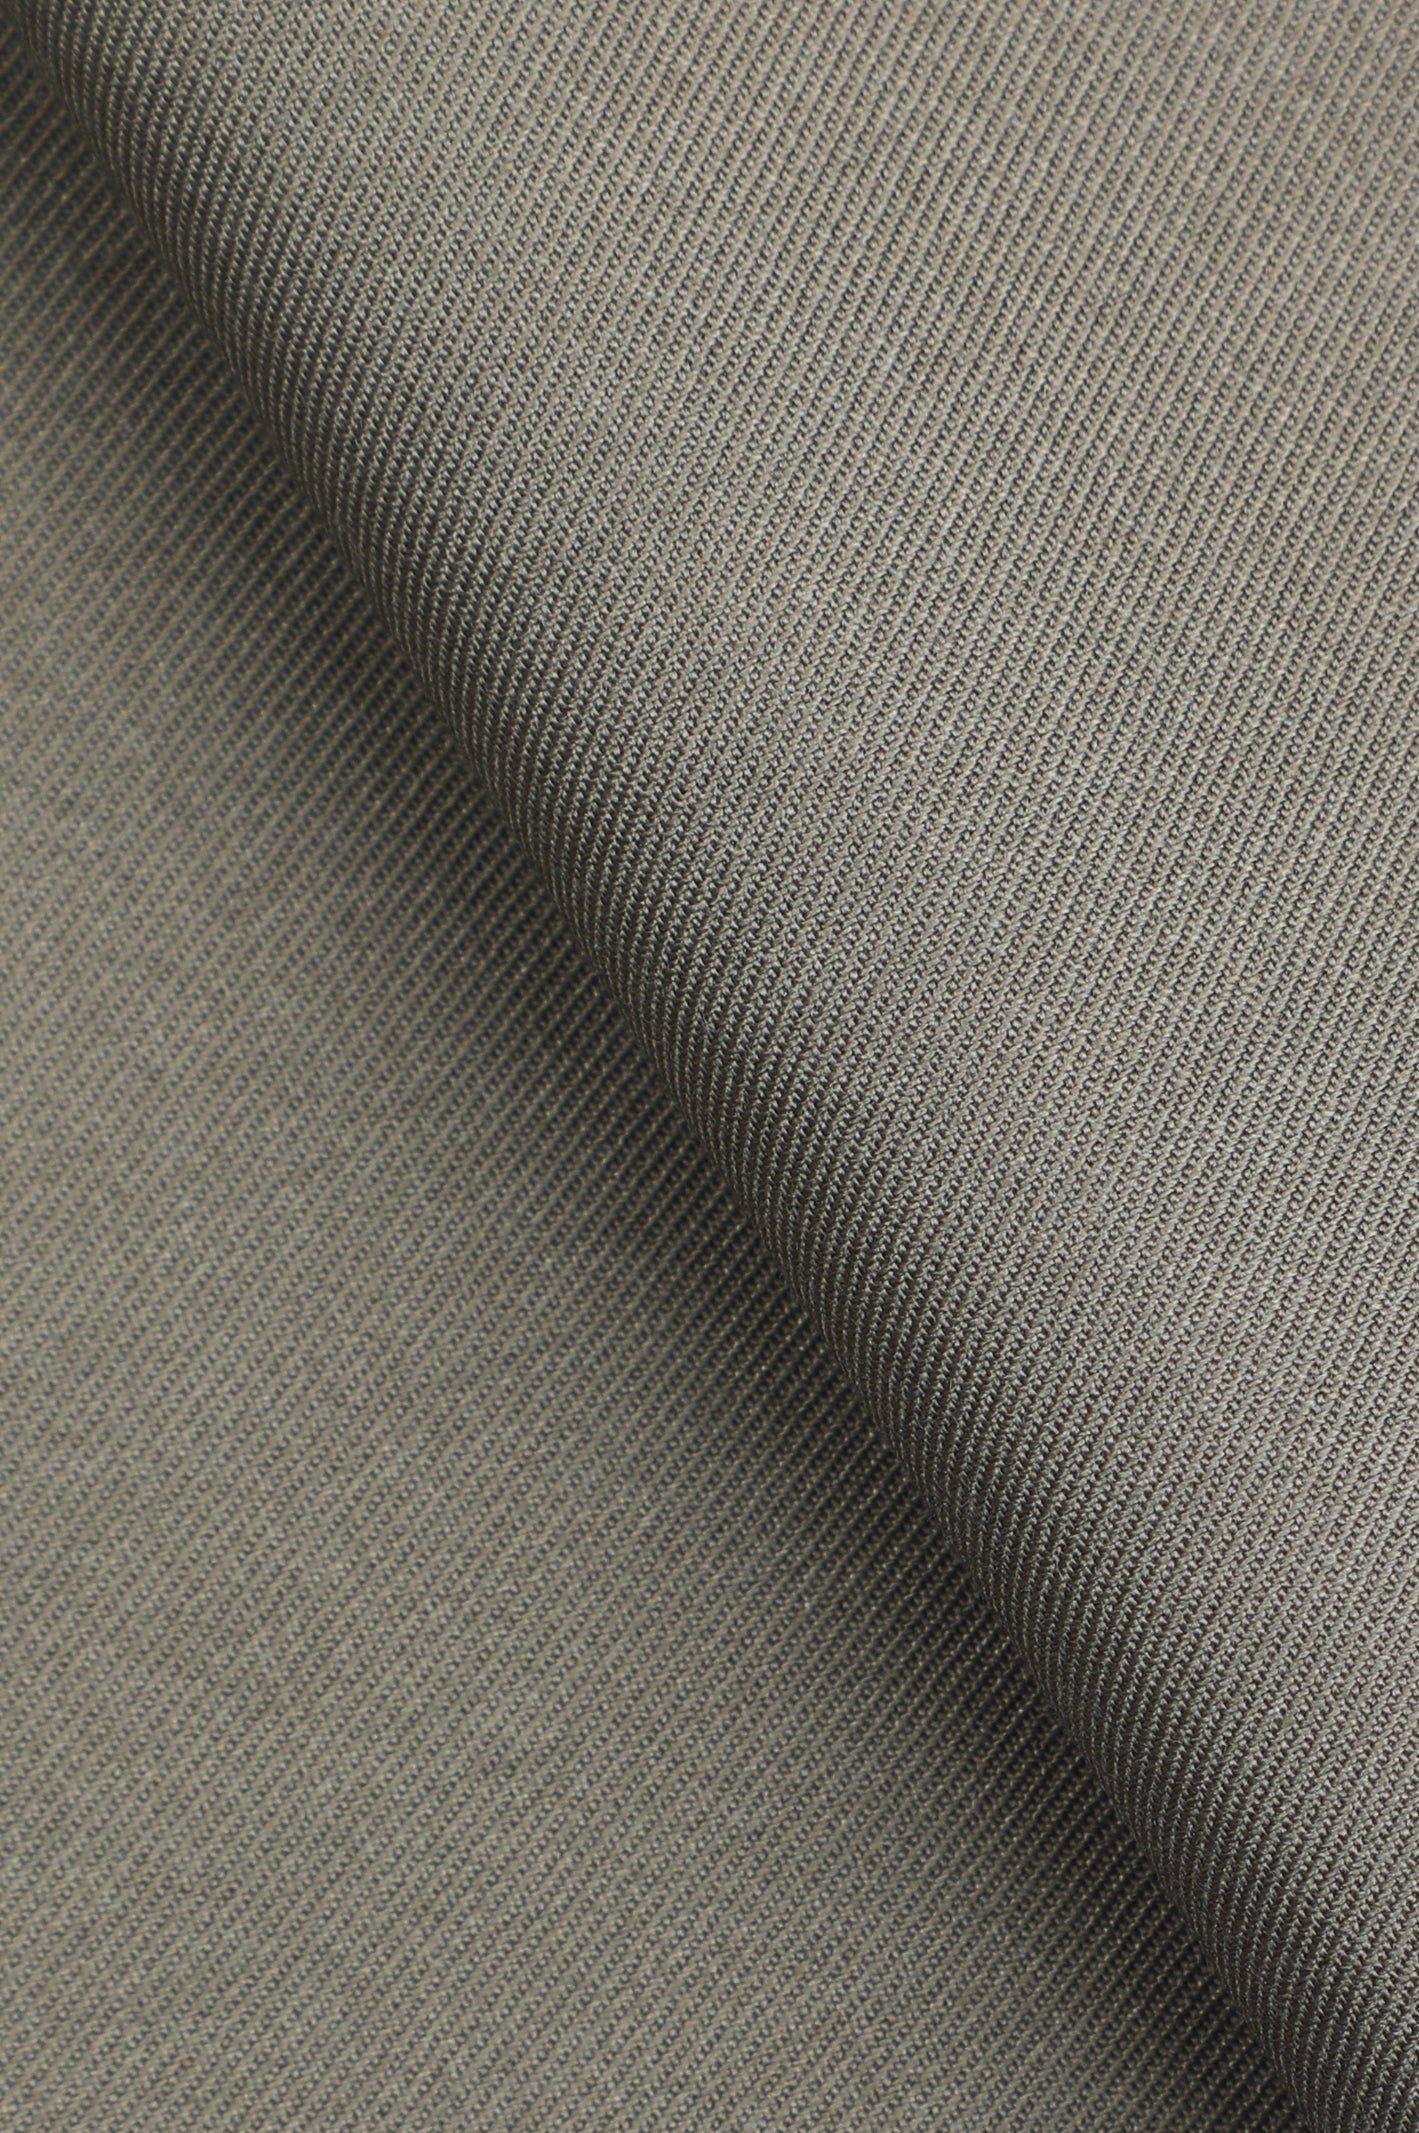 Unstitched Fabric for Men SKU: US0198-OLIVE - Diners